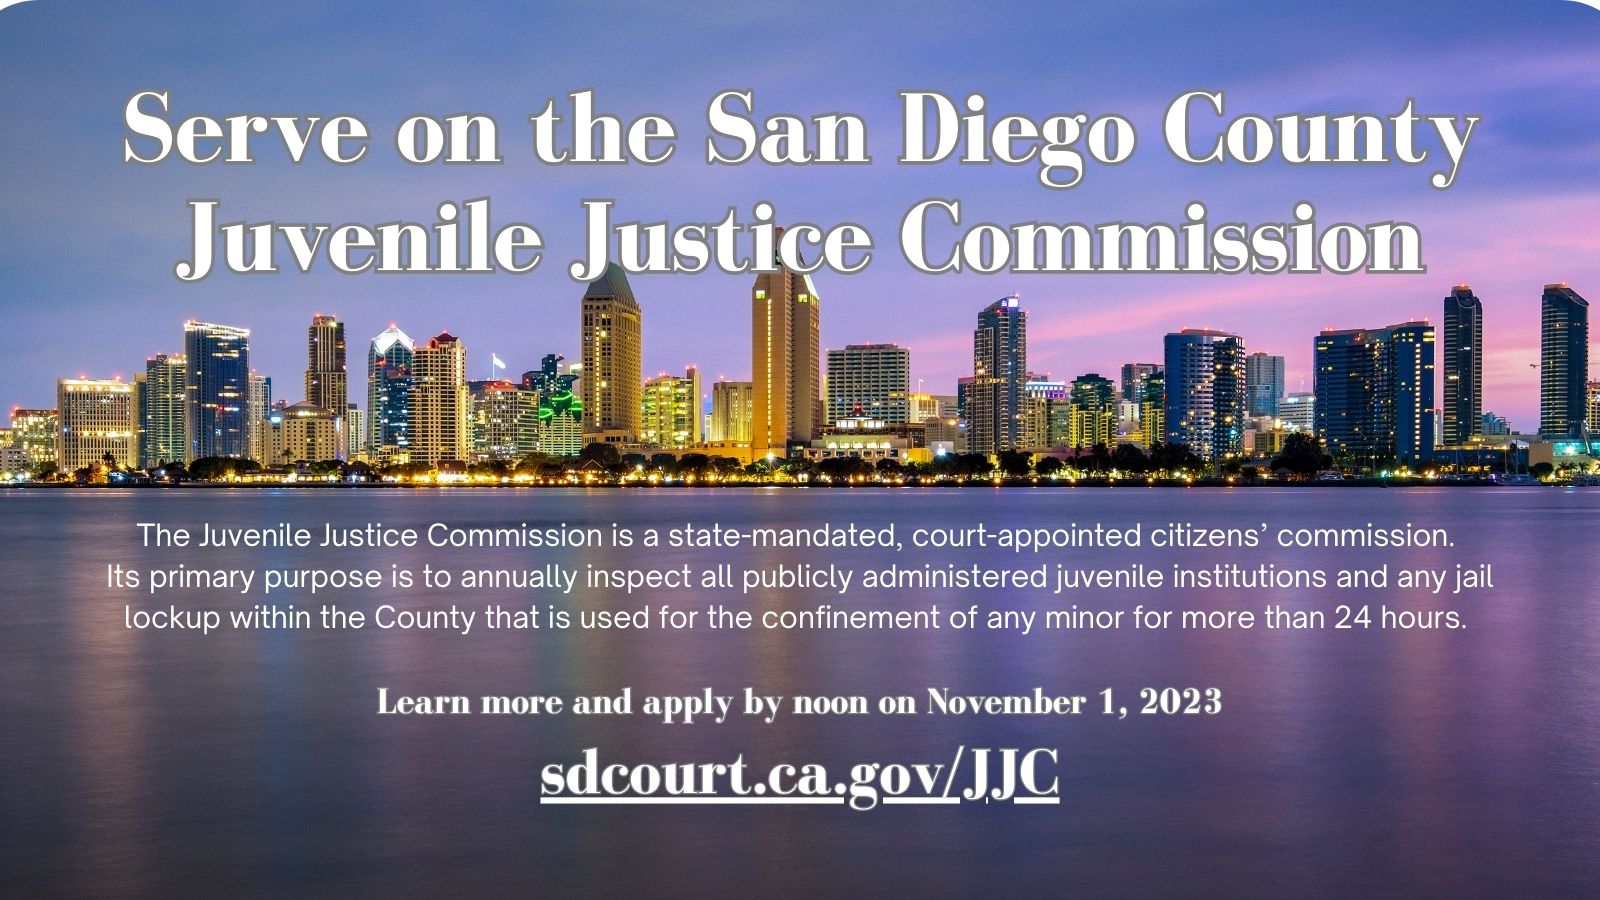 Juvenile Justice Commission Seeks Applicants